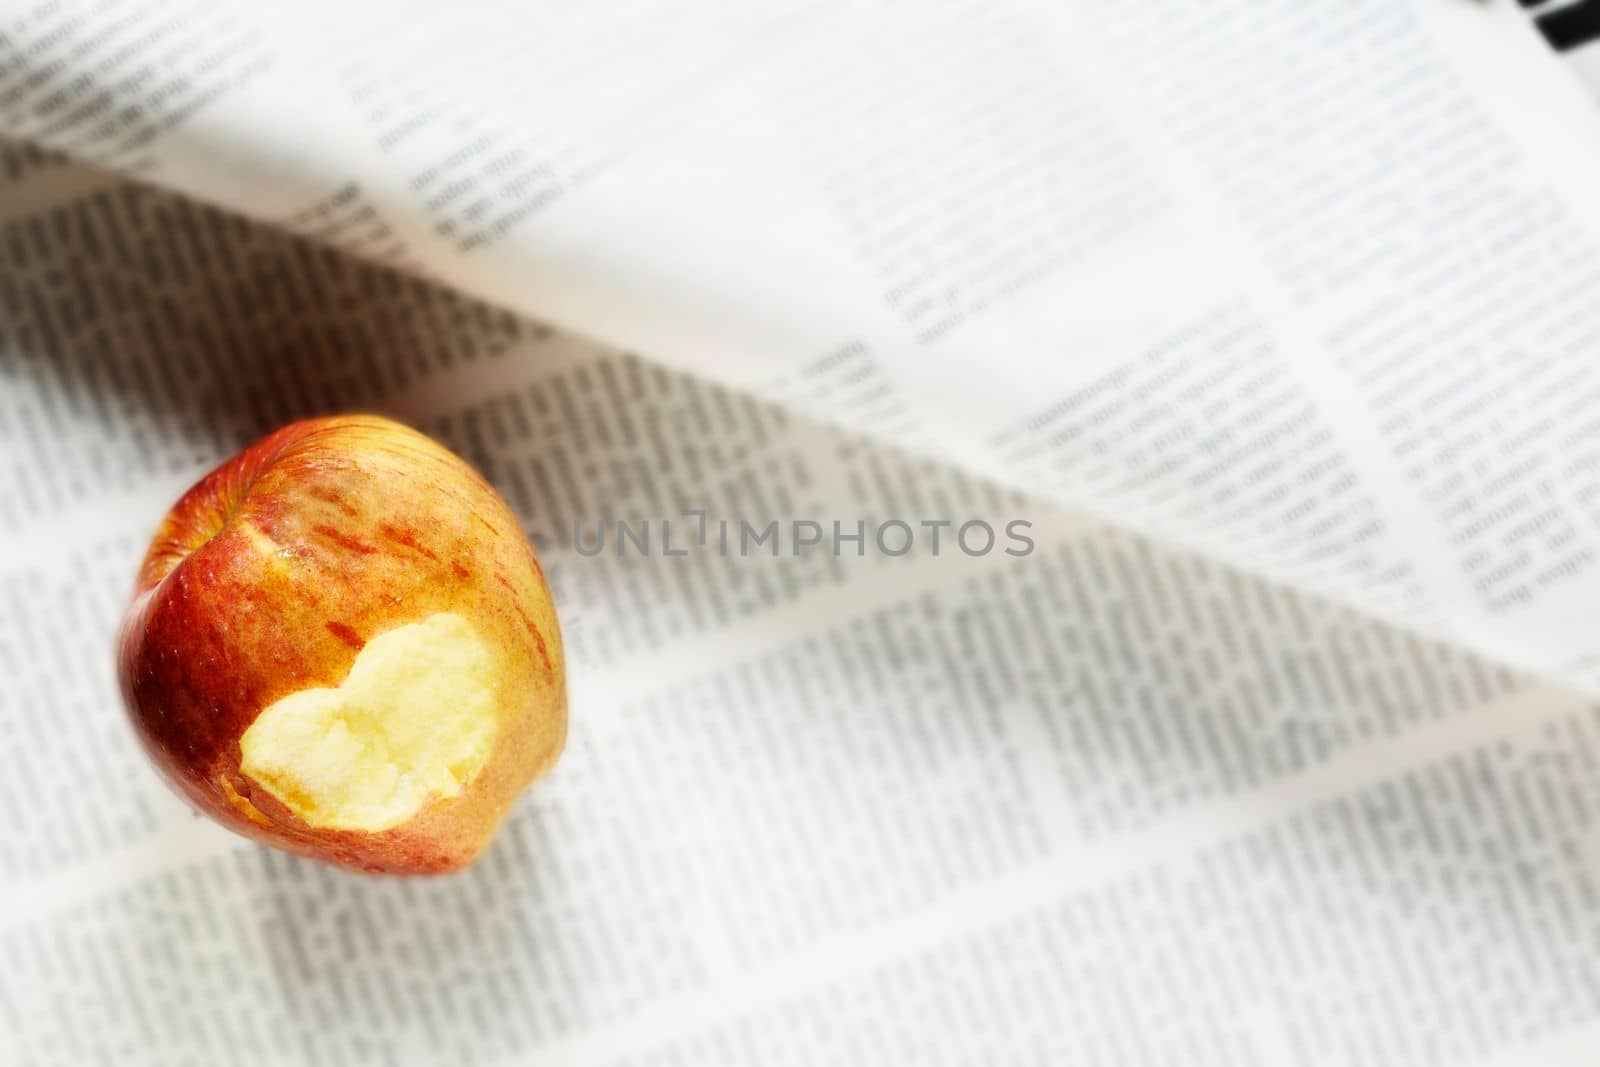 Eaten apple and newspaper by victimewalker